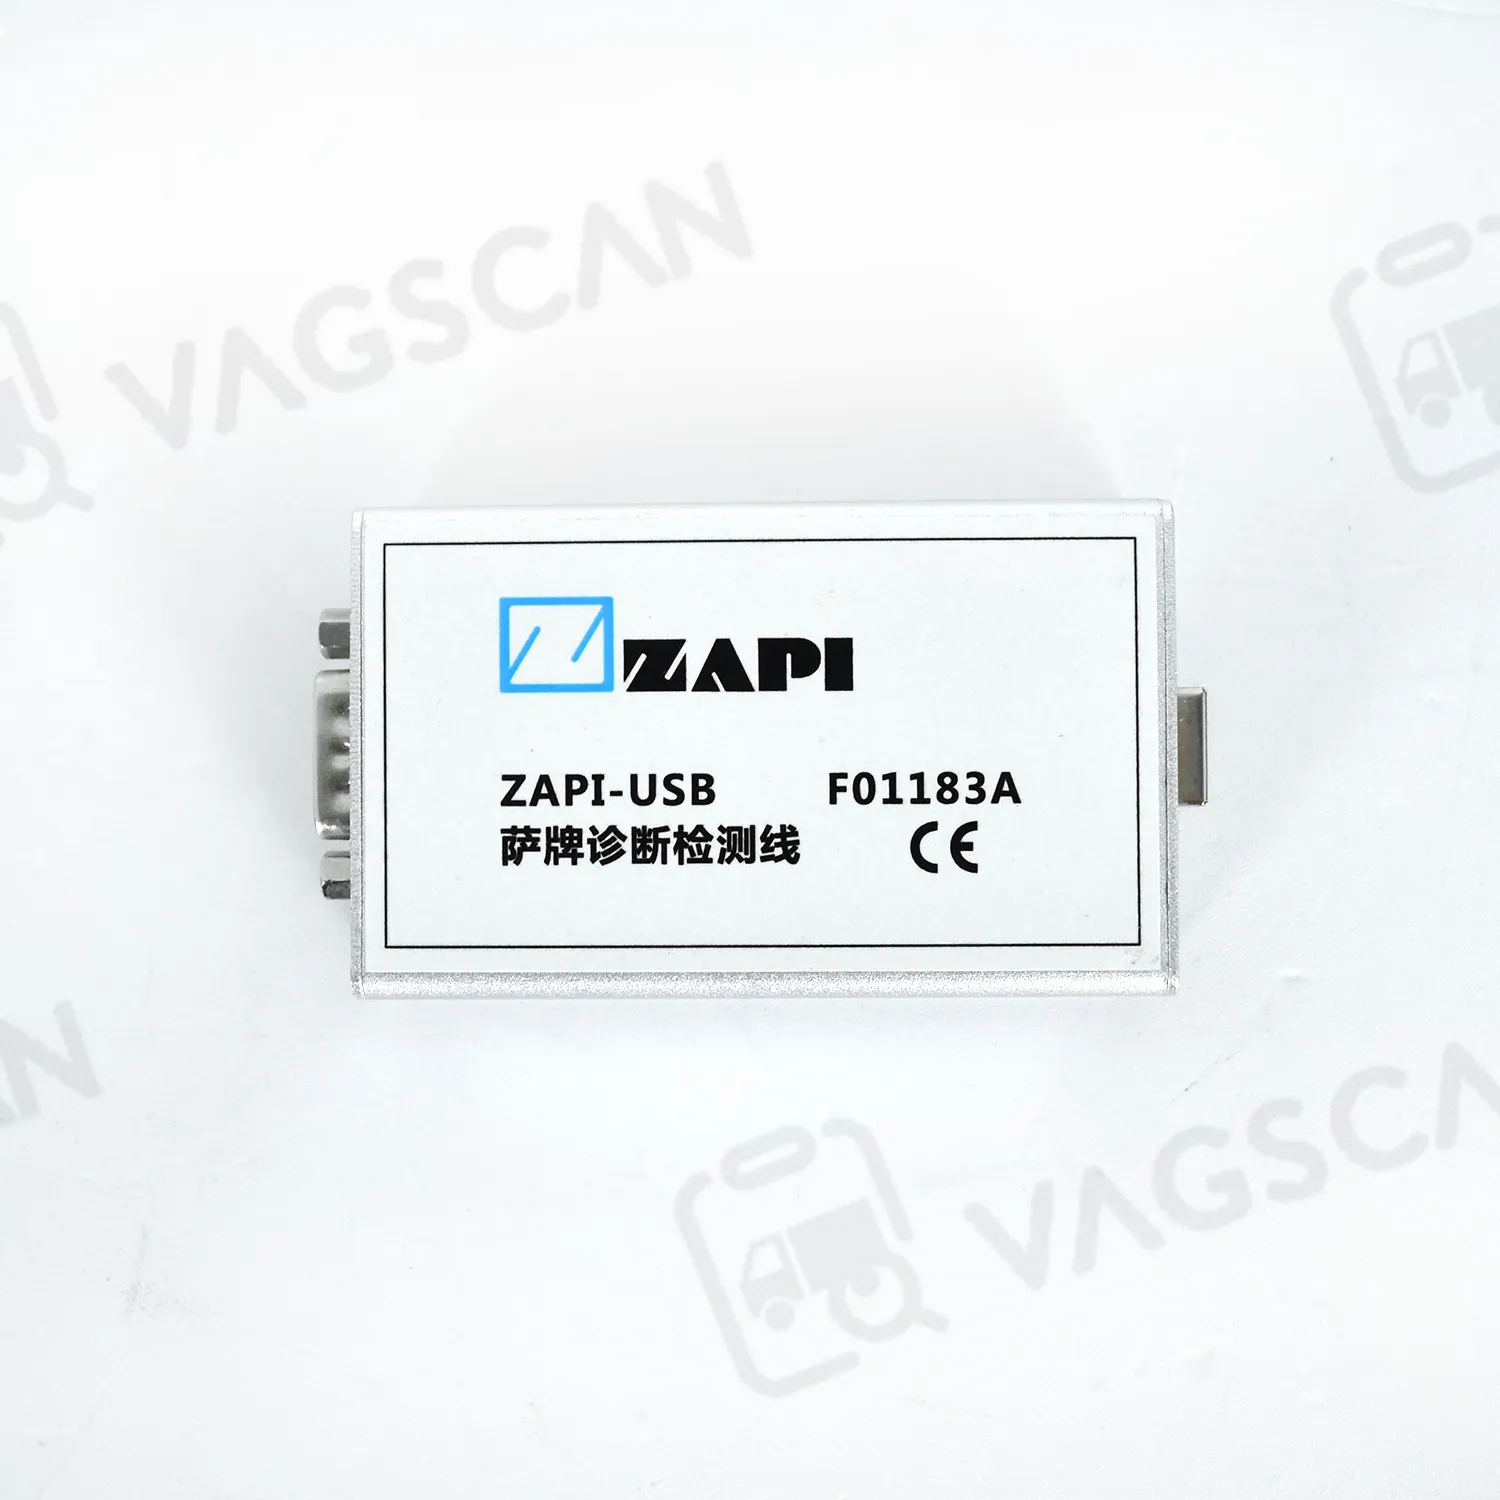 Handheld DC Motor Controller Programador para controlador Zapi Zapi Console Software ZAPI-USB Programador